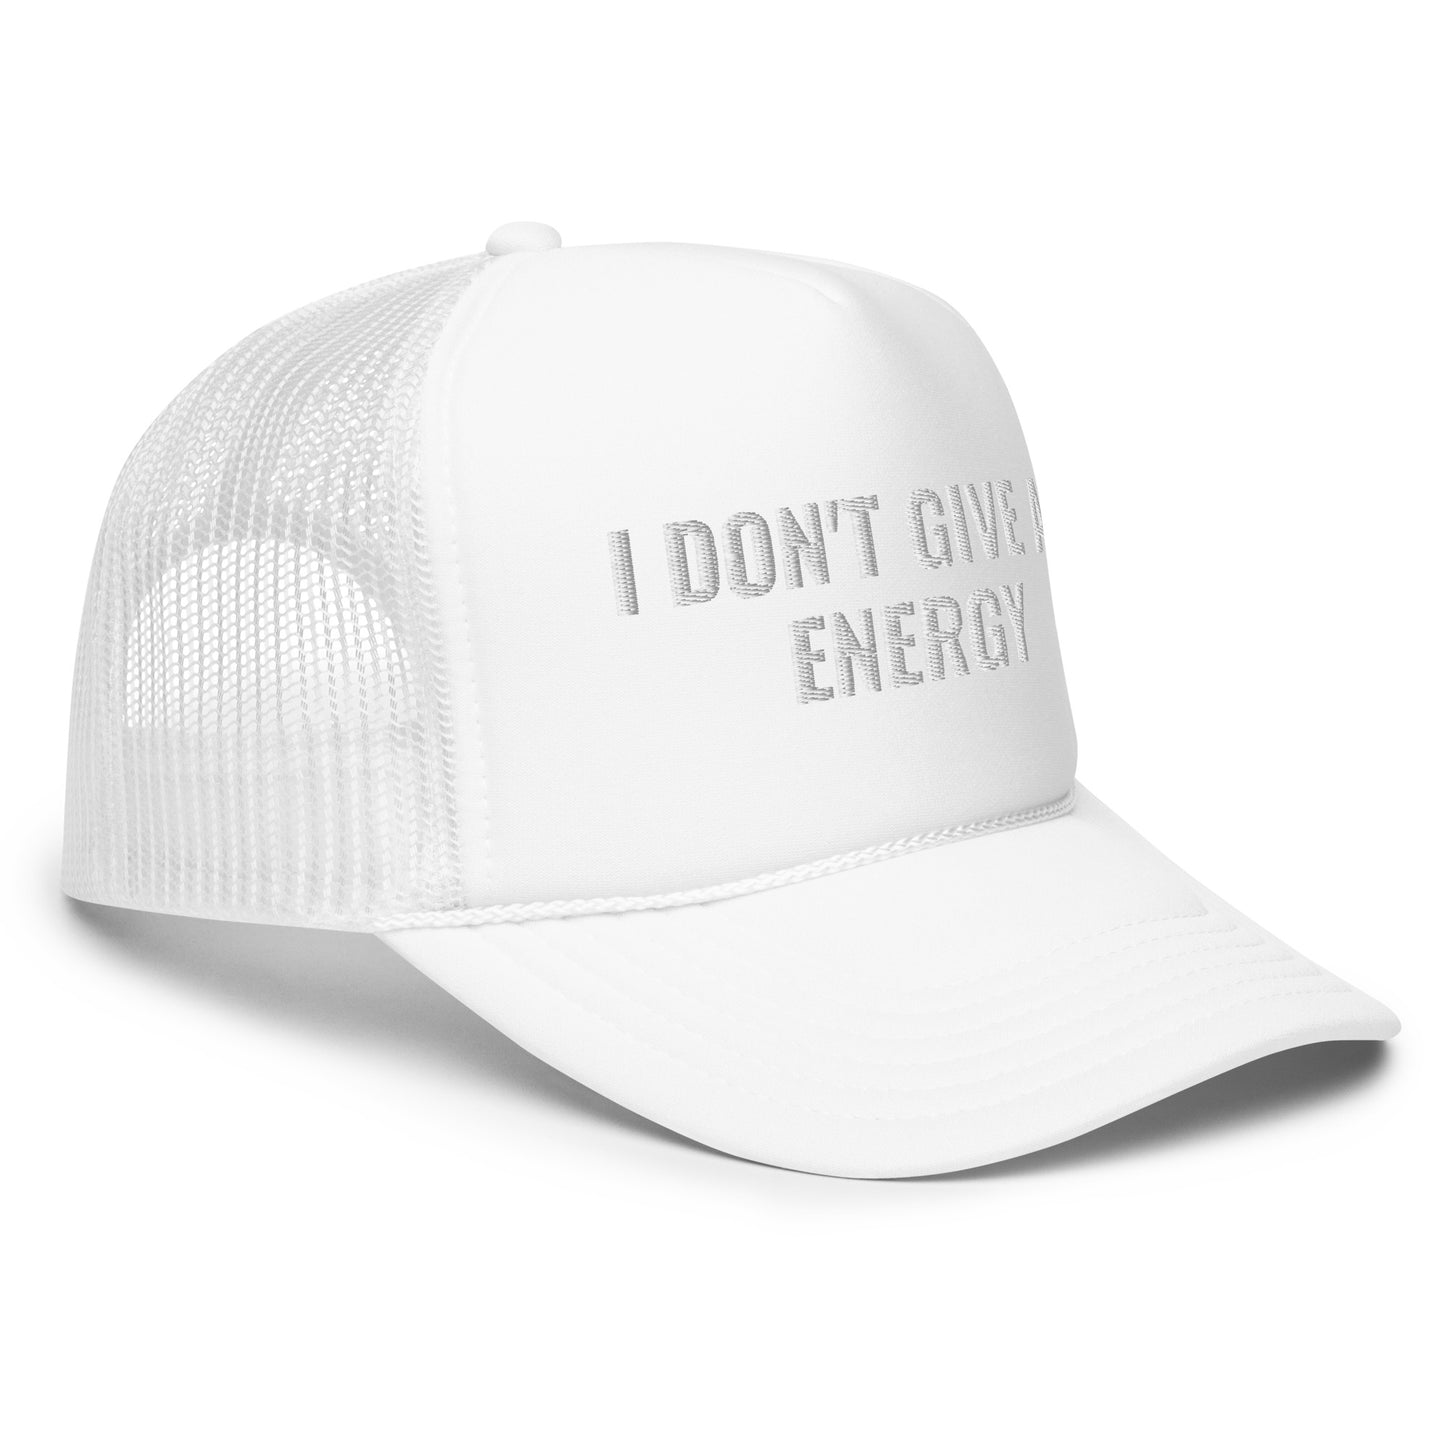 IDGAF trucker hat - PROTECT YO ENERGY 